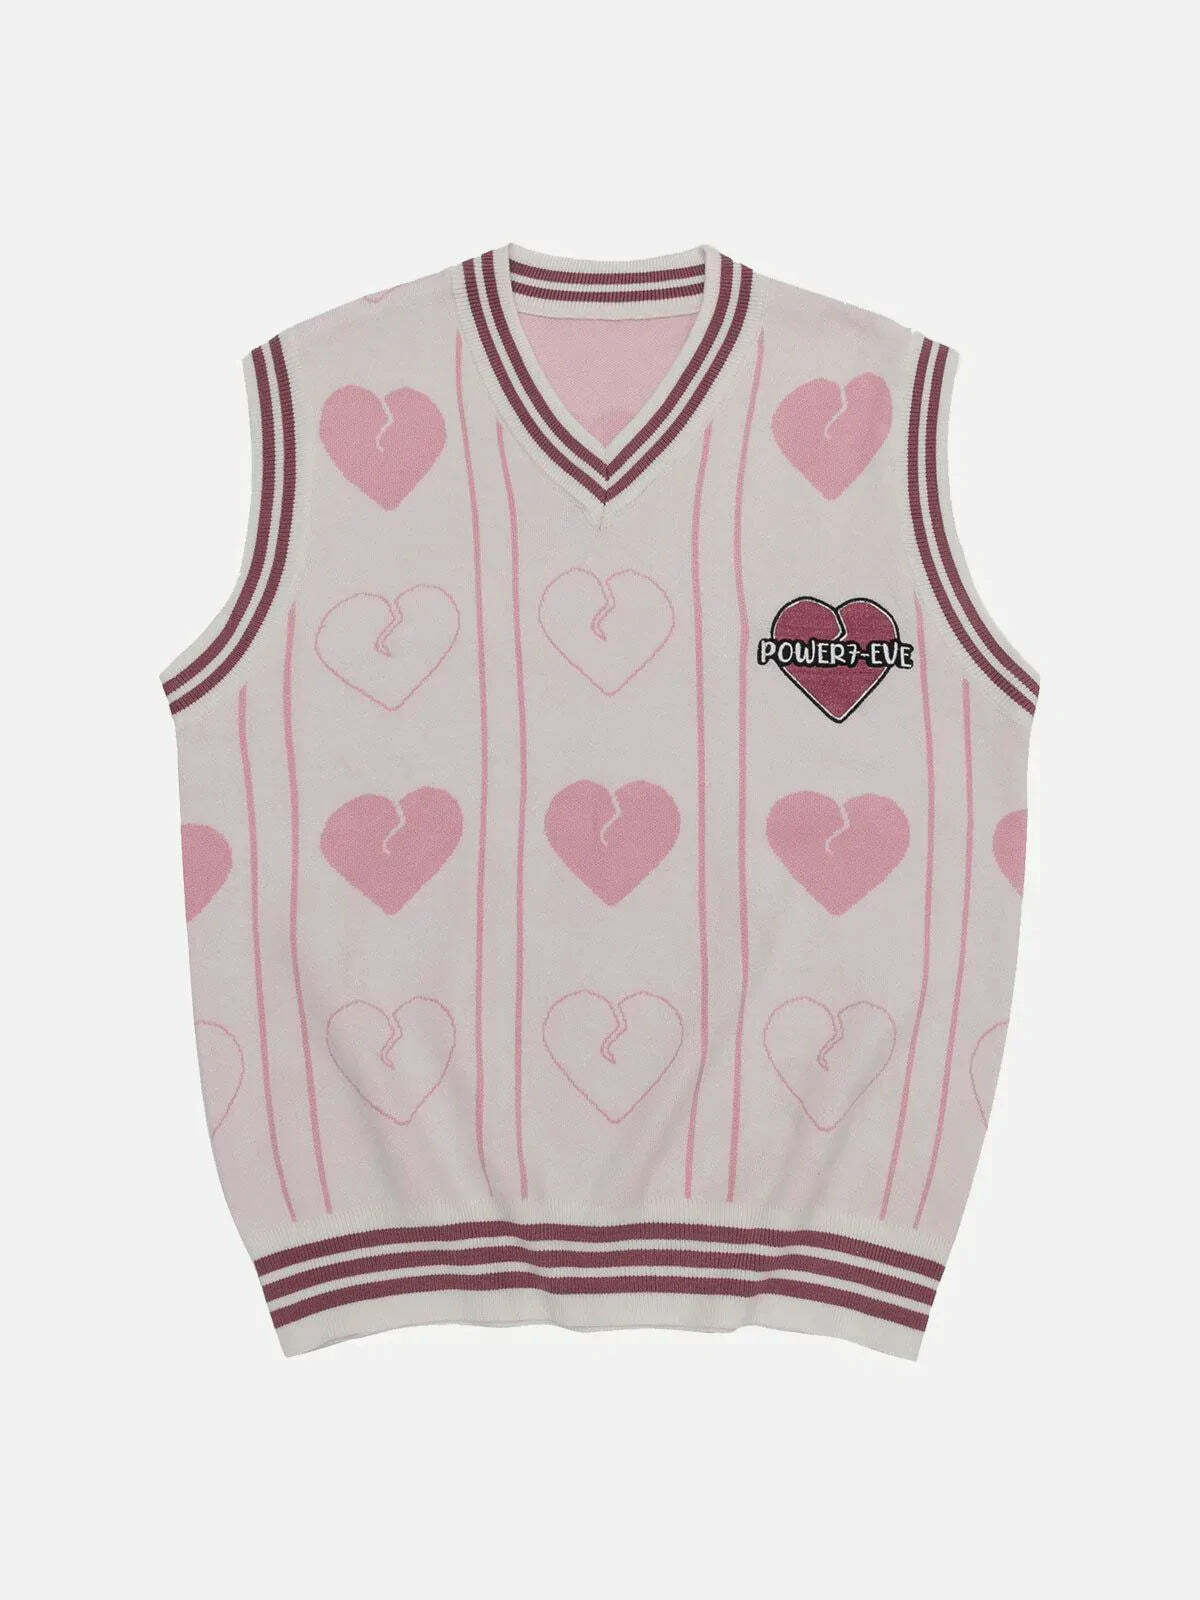 colorblock heart sweater vest edgy & vibrant streetwear 3326